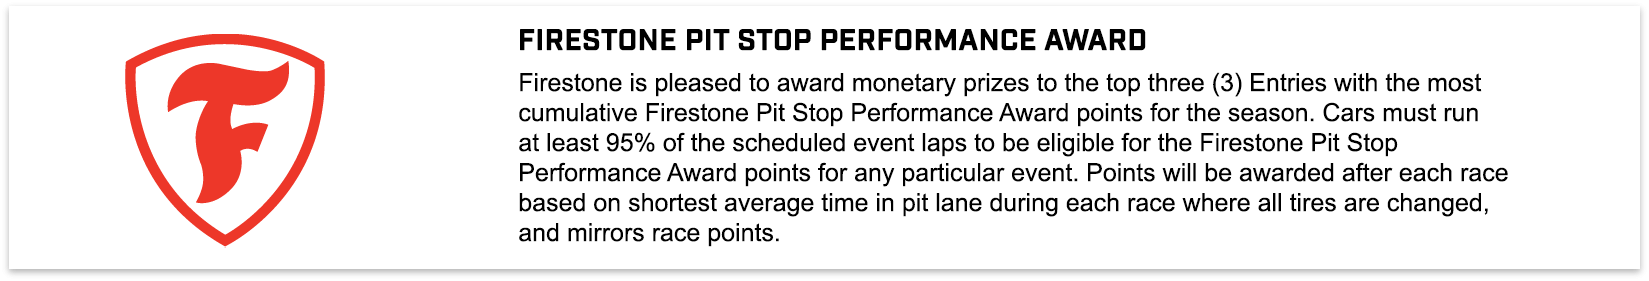 Firestone Pit Stop Performance Award